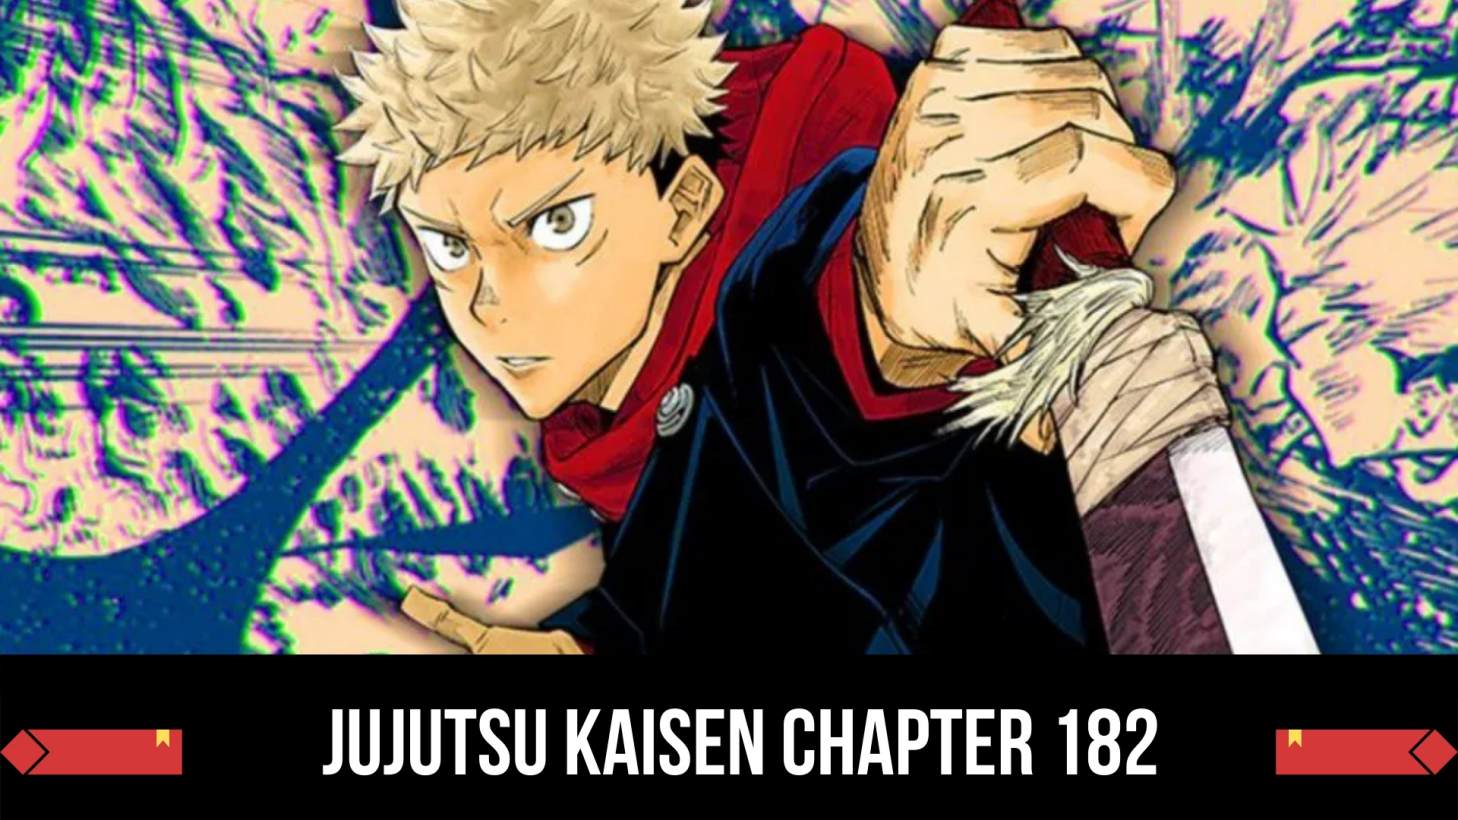 Jujutsu Kaisen Chapter 182 Release Date